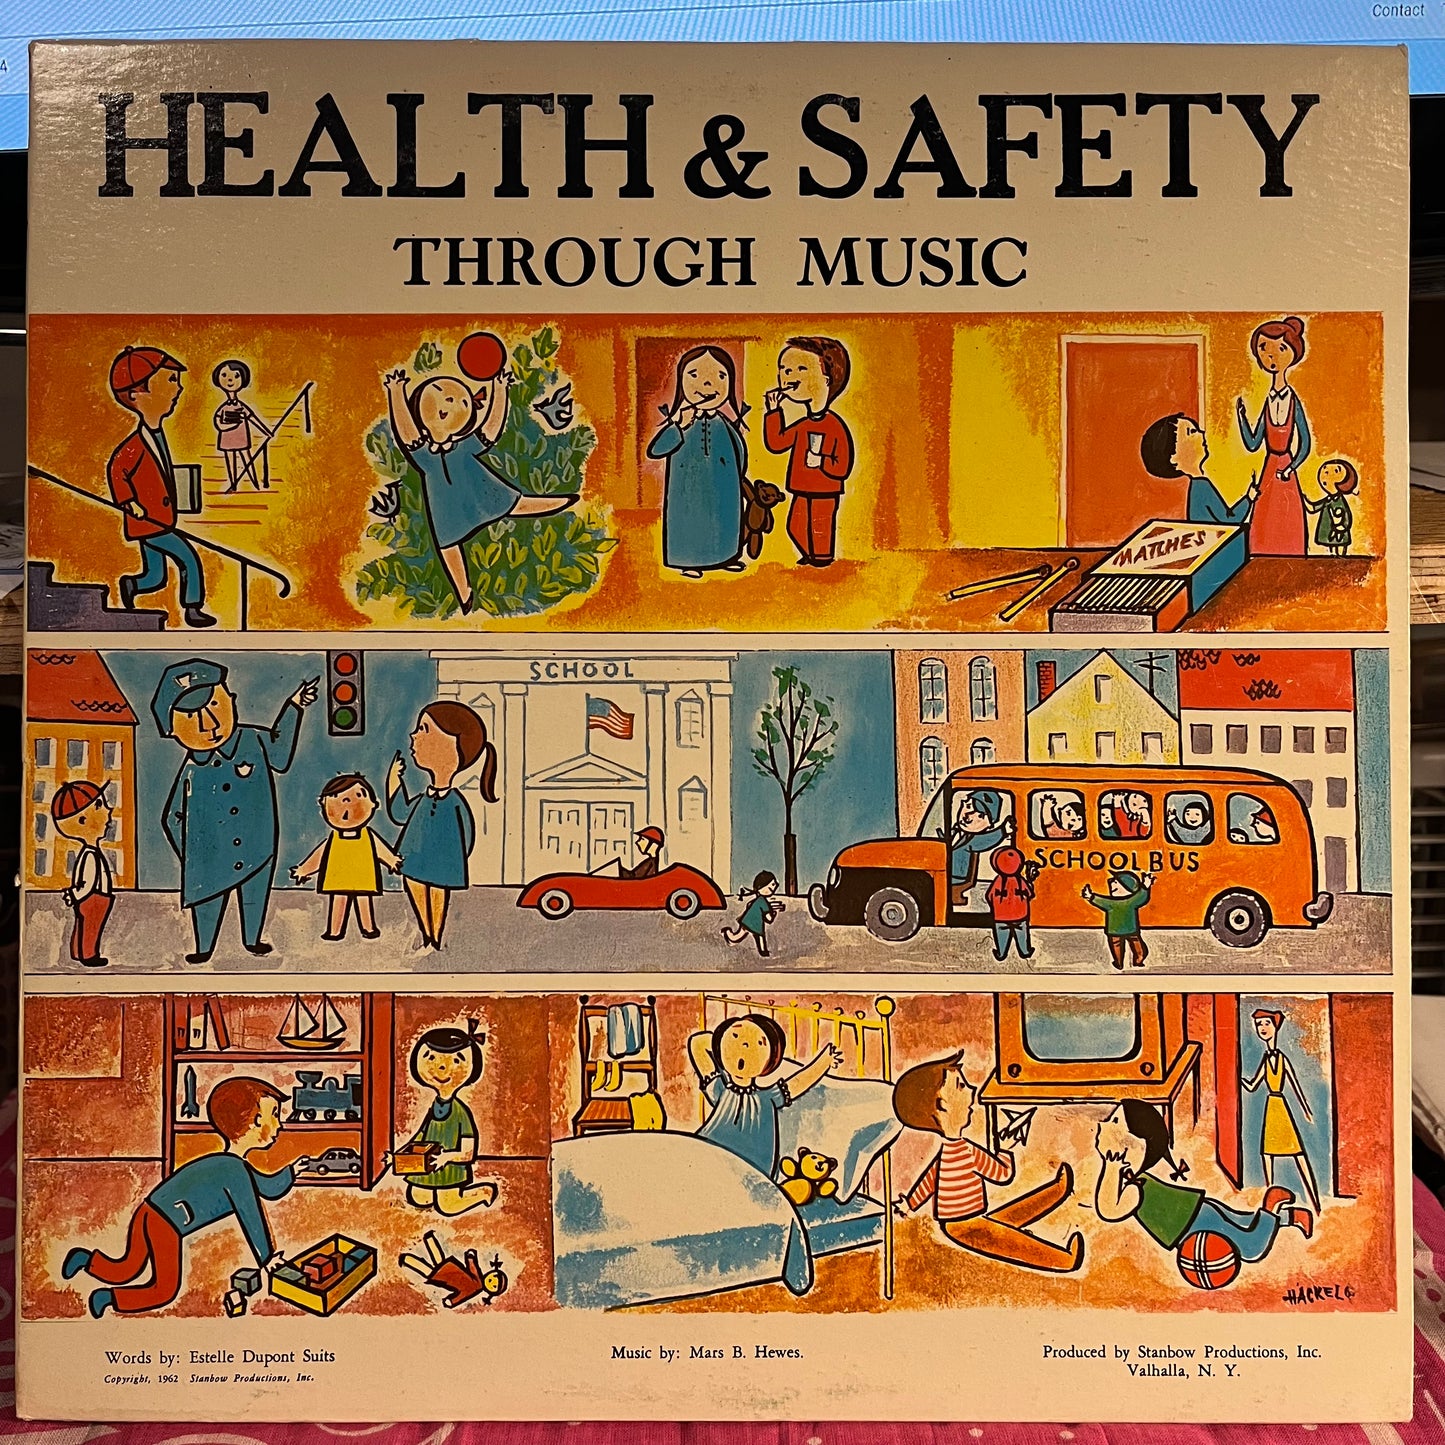 Herb & Betty Warner Health & Safety Through Music LP Near Mint (NM or M-) Excellent (EX)